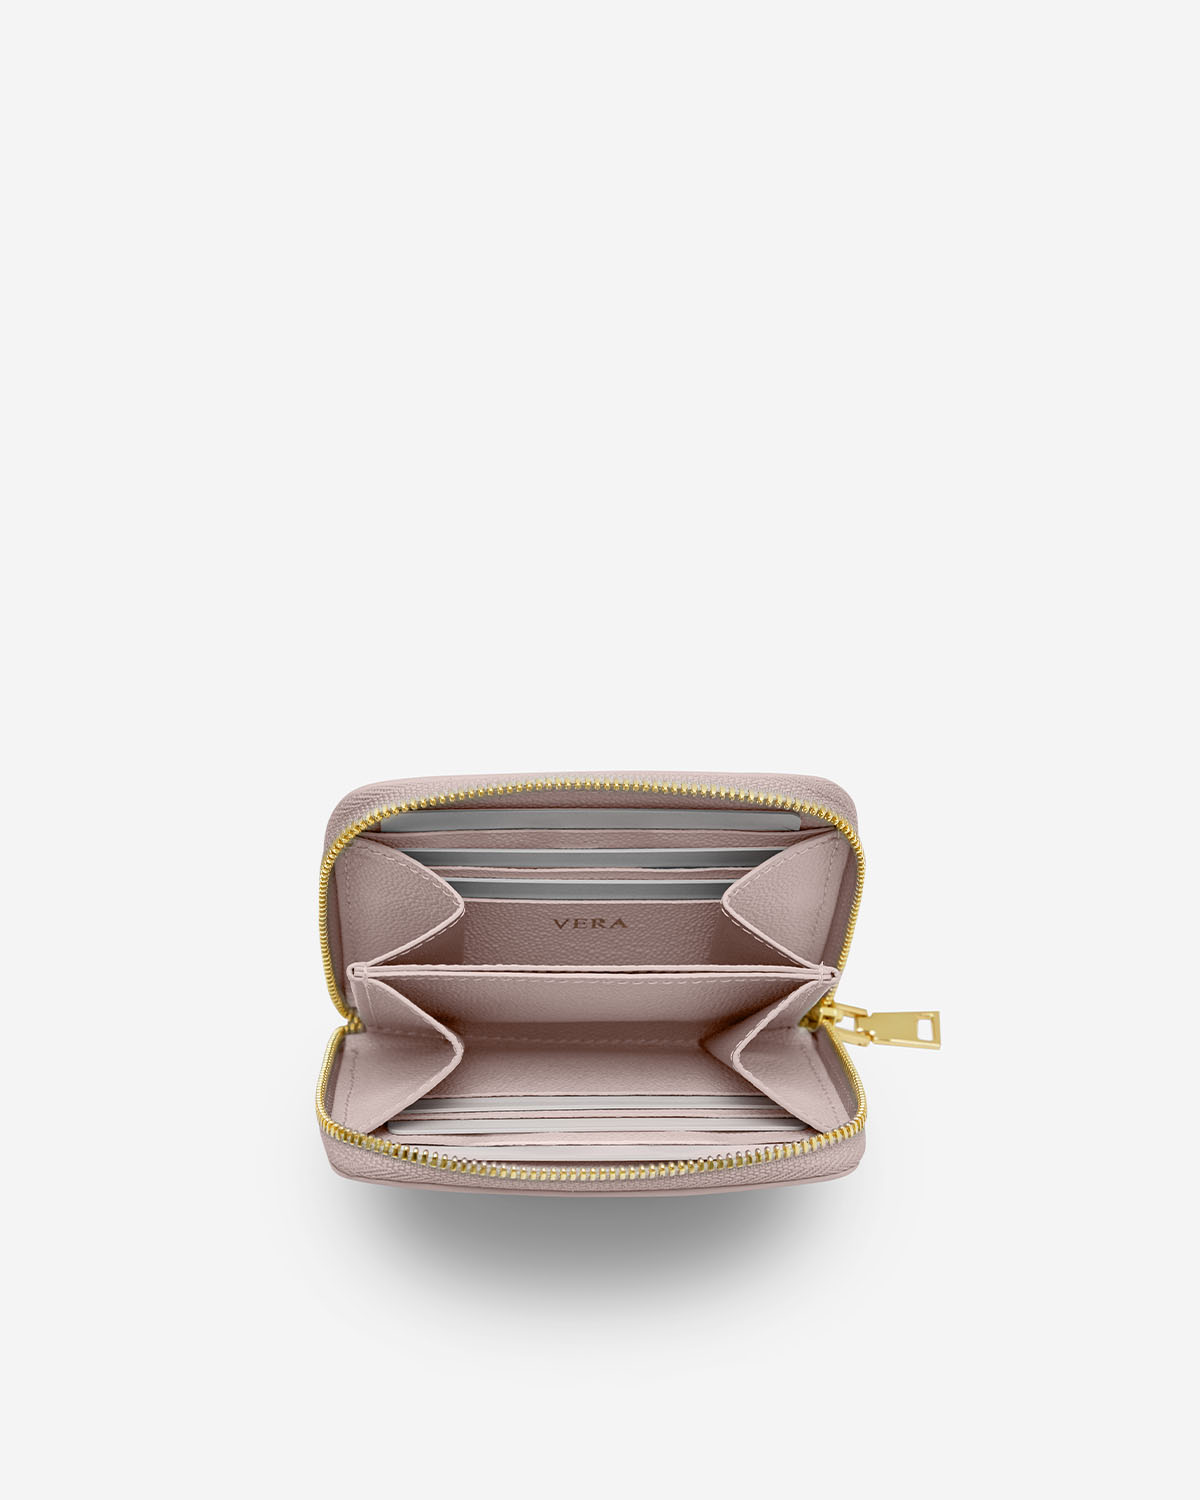 VERA CAVIAR Zipped Wallet in Rose Quartz กระเป๋าสตางค์ซิปรอบ อยู่ทรงสวย ทำจากหนังแท้ลาย Caviar สี Rose Quartz